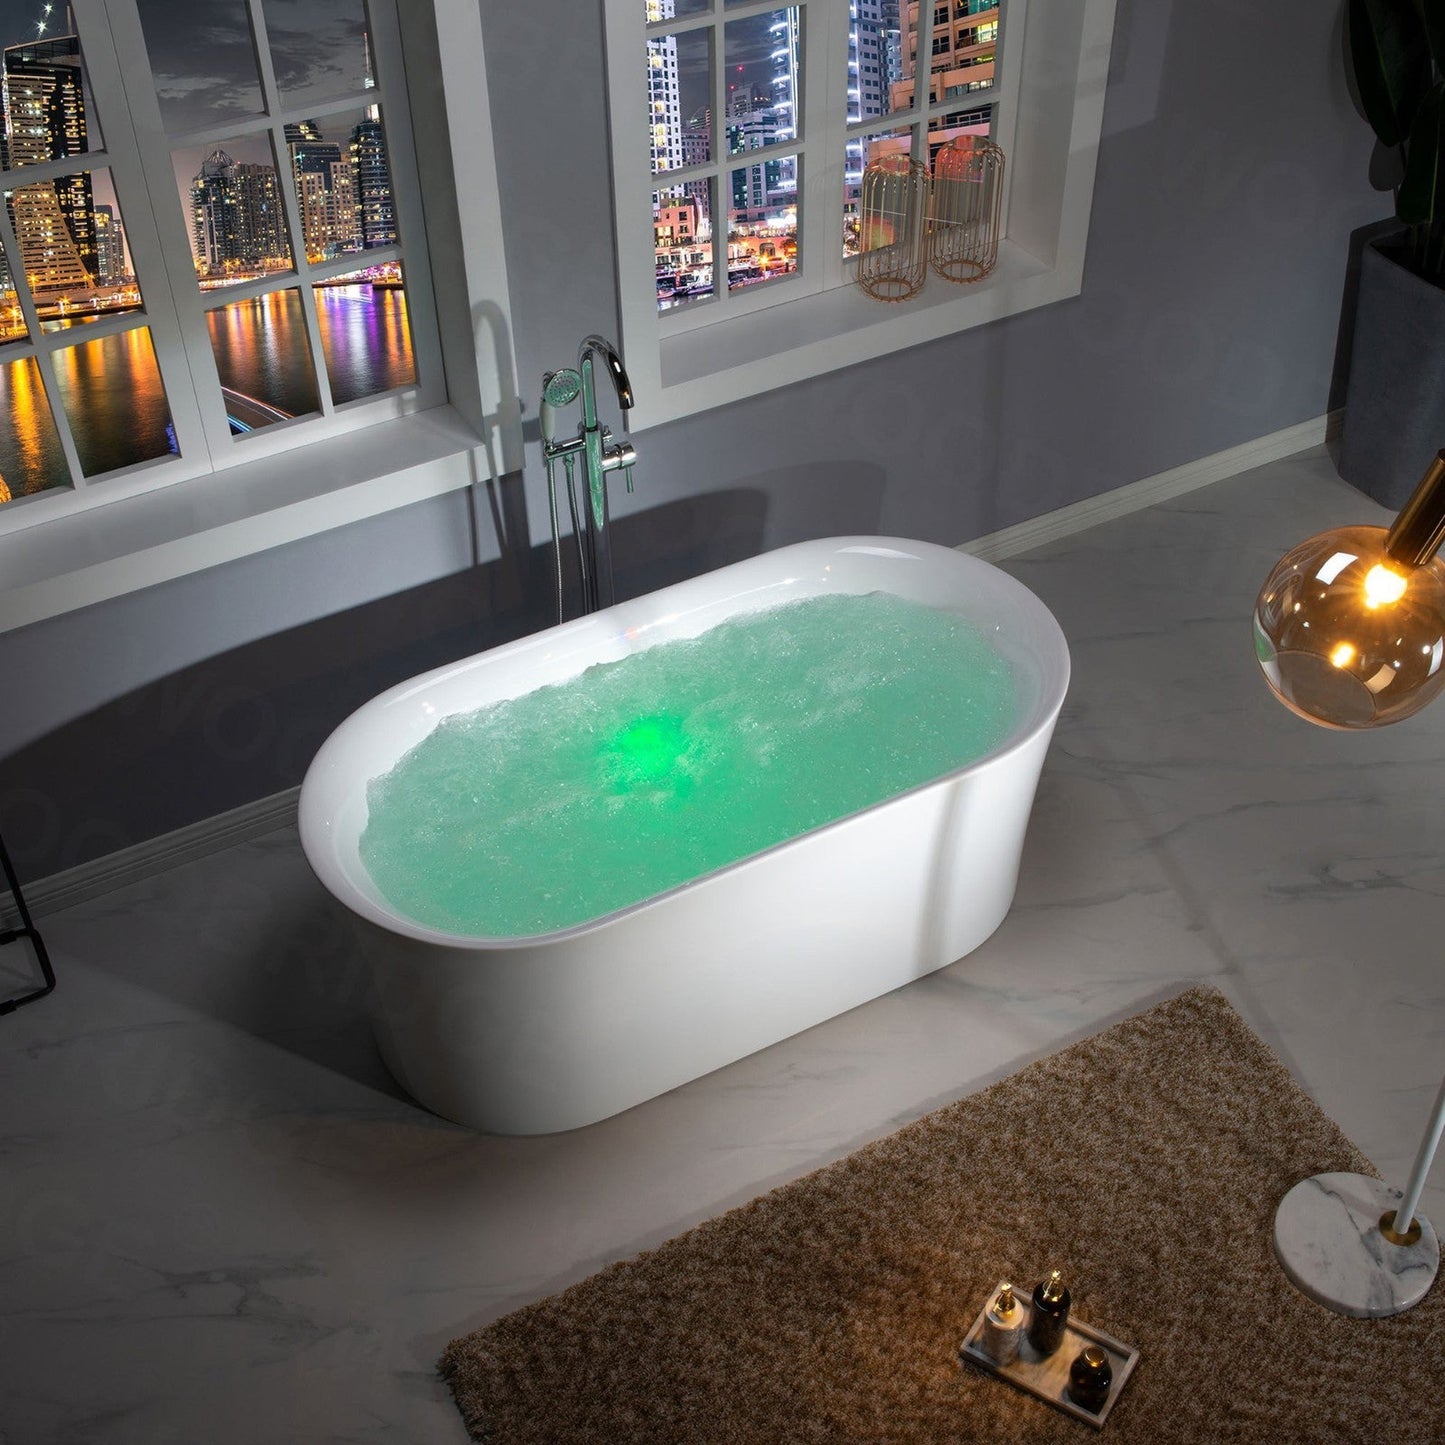 WoodBridge 67" White Acrylic Freestanding Air Bubble Soaking Bathtub With Brushed Nickel Overflow and Drain Finish